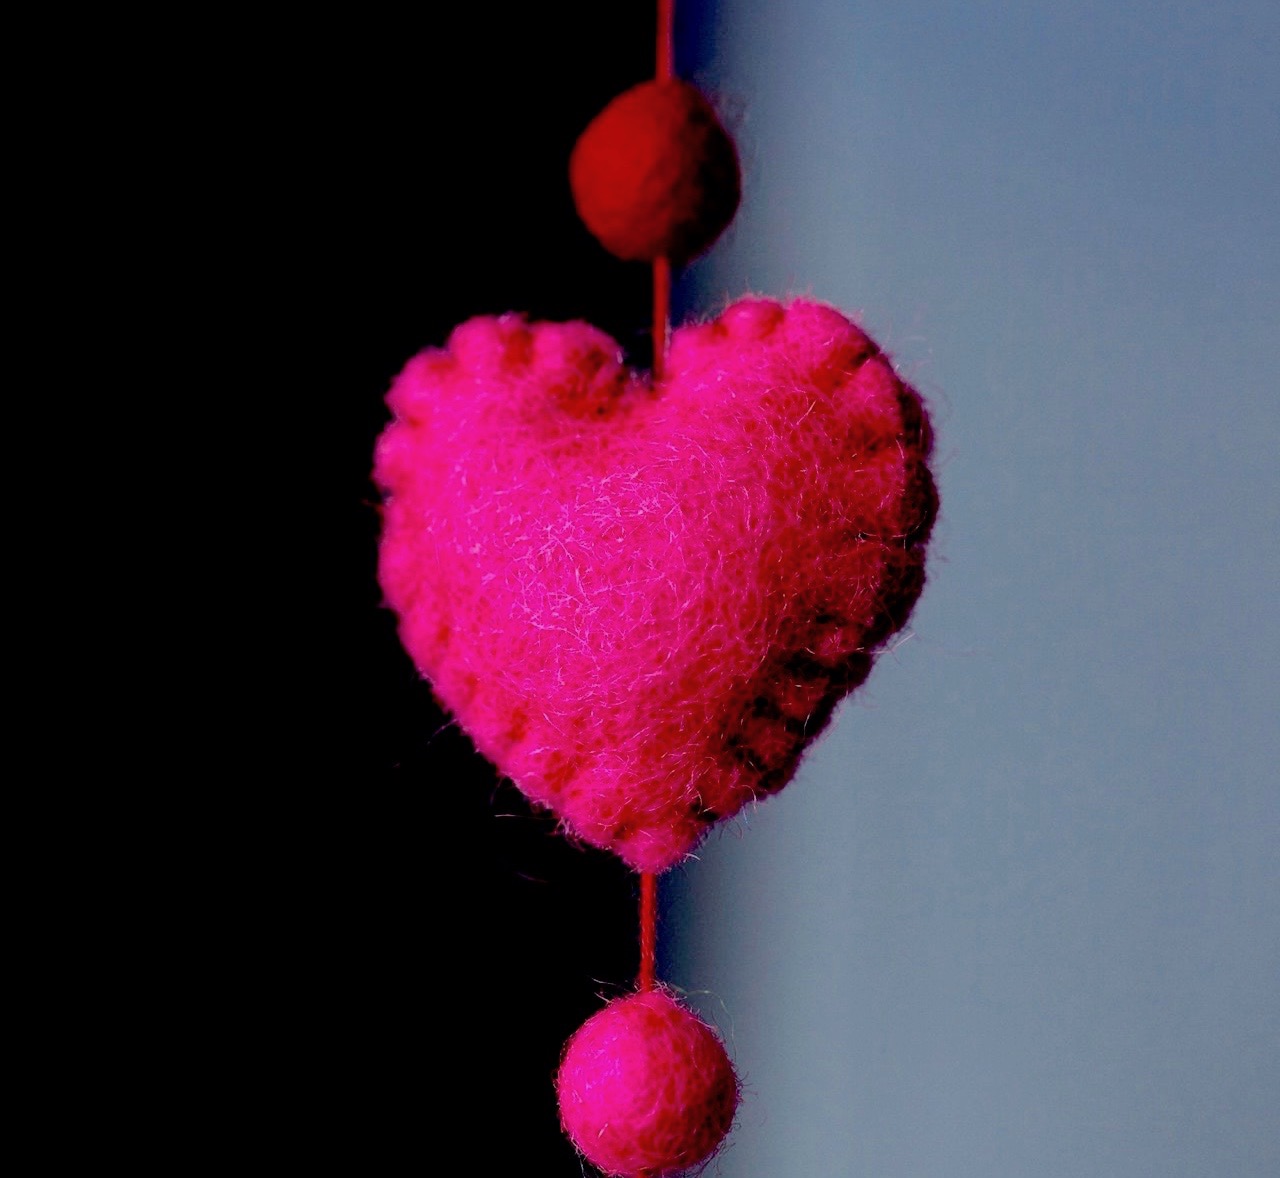 Fuschia pink heart made of felt hanging against a dark background